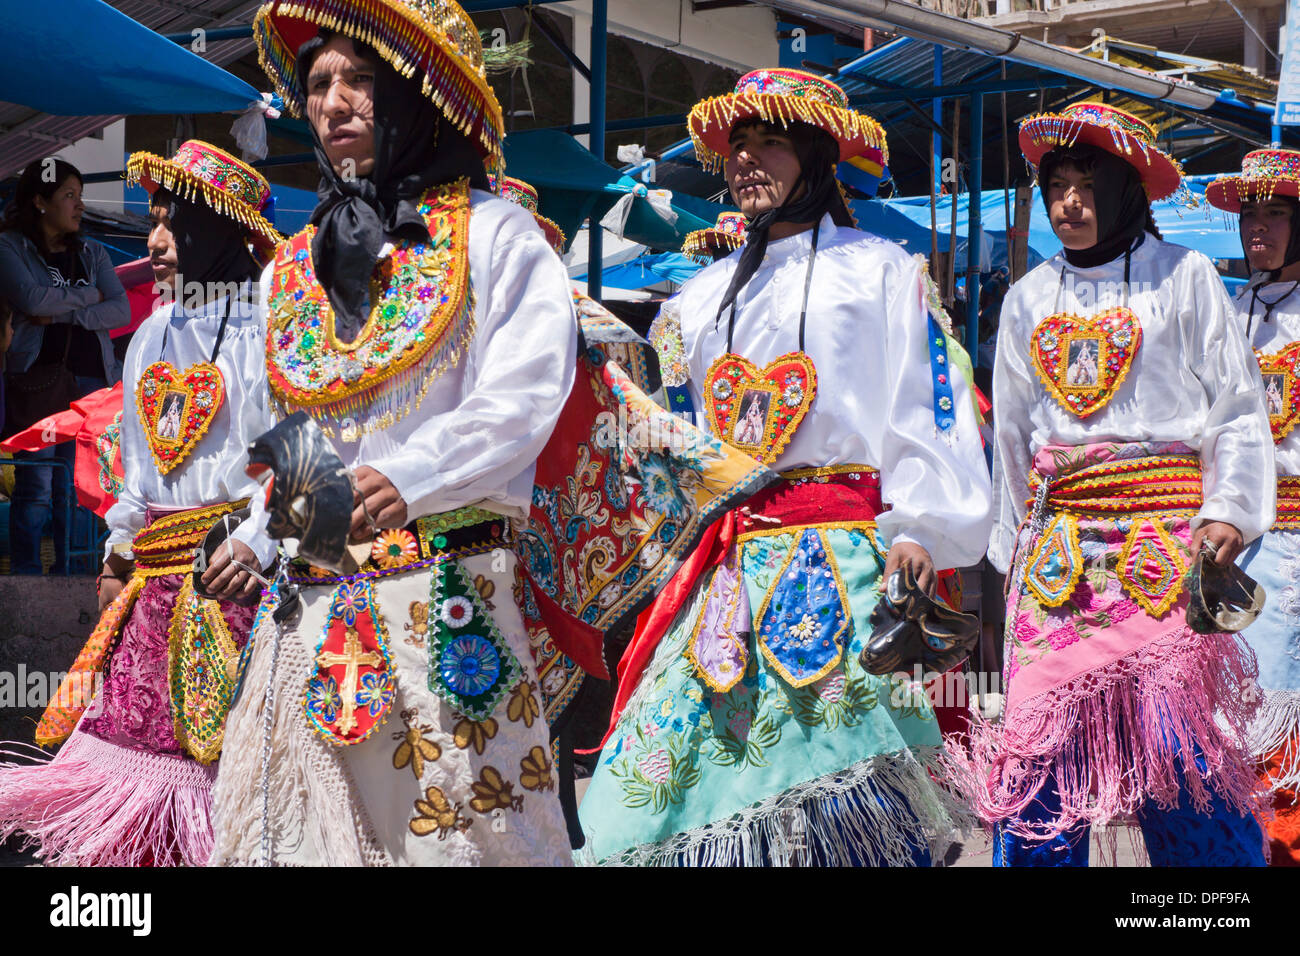 Preparation for the religious festival of Corpus Christi festival, llama, Urcos, Peru, South America Stock Photo